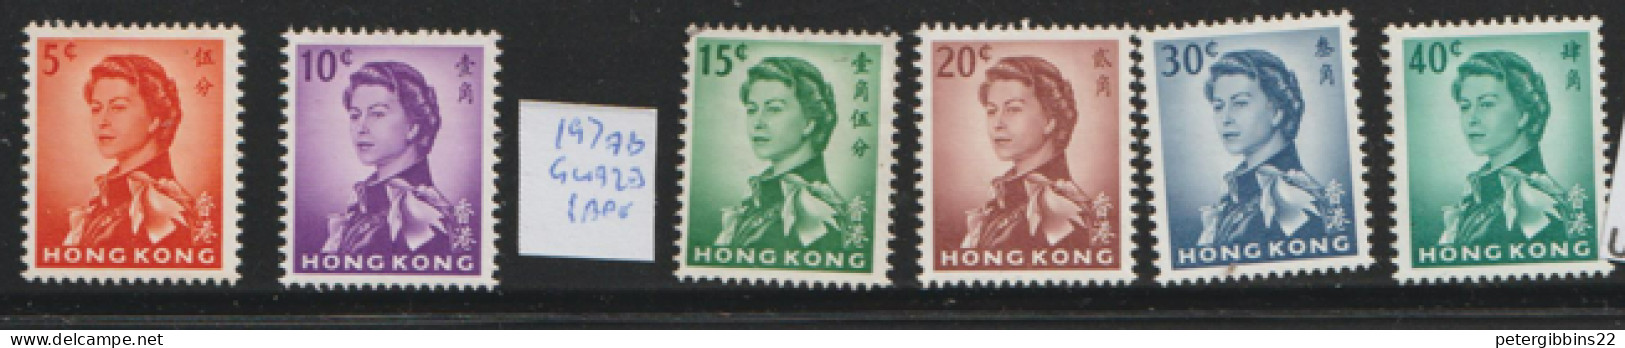 Hong Kong 1962 Definitives  Various Valus  Wmk  Upright  Mounted Mint - Nuevos